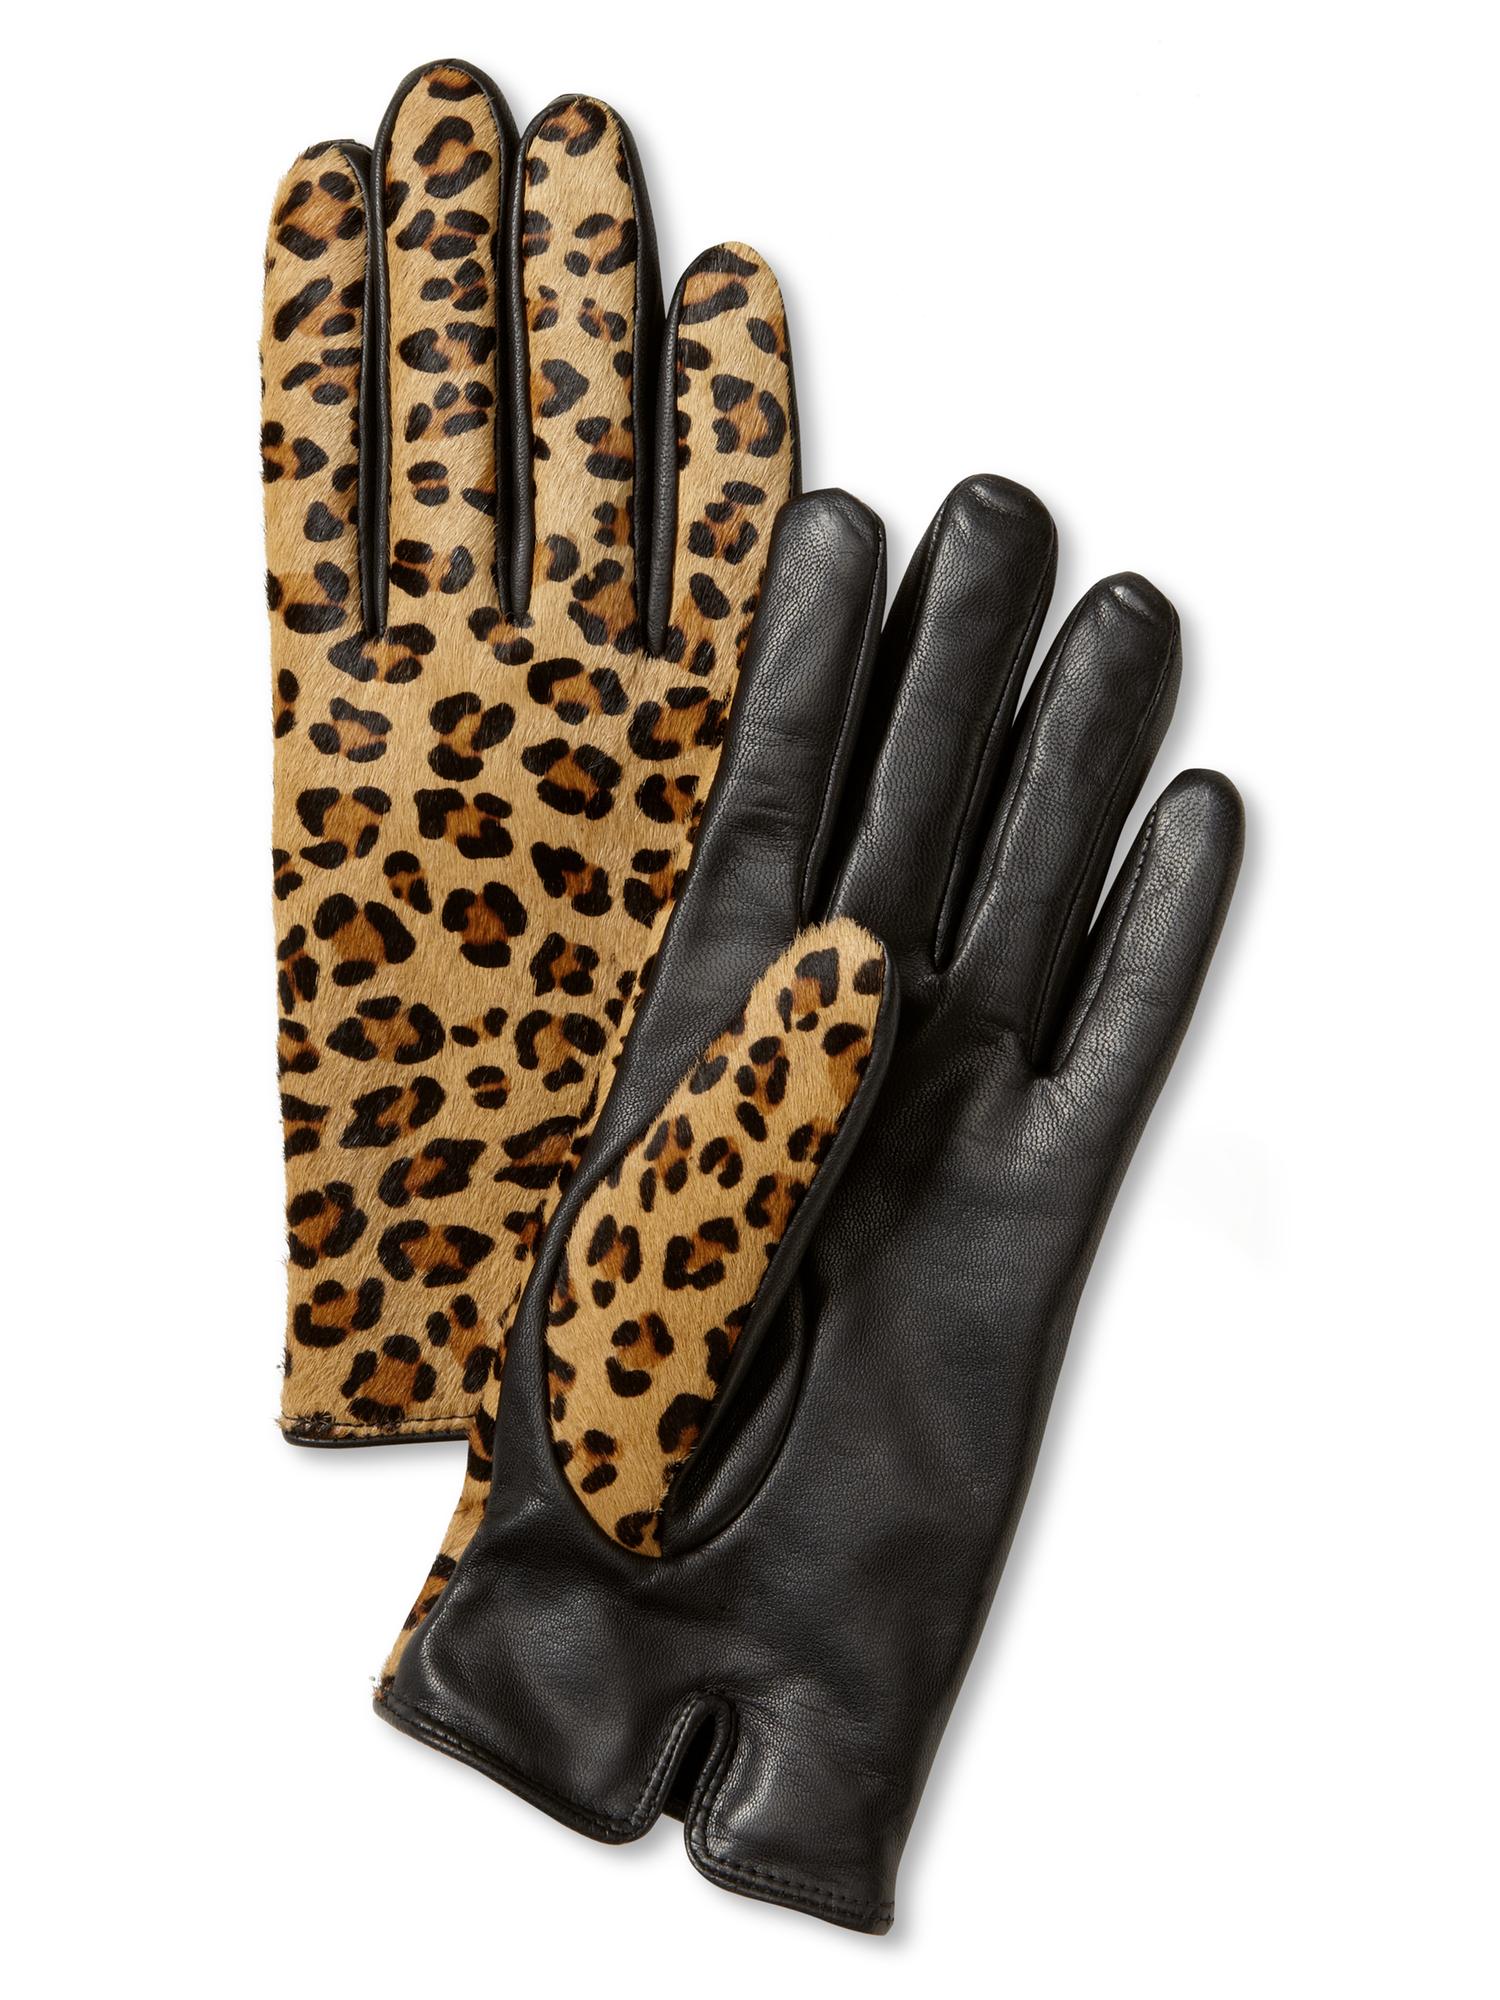 Leopard glove